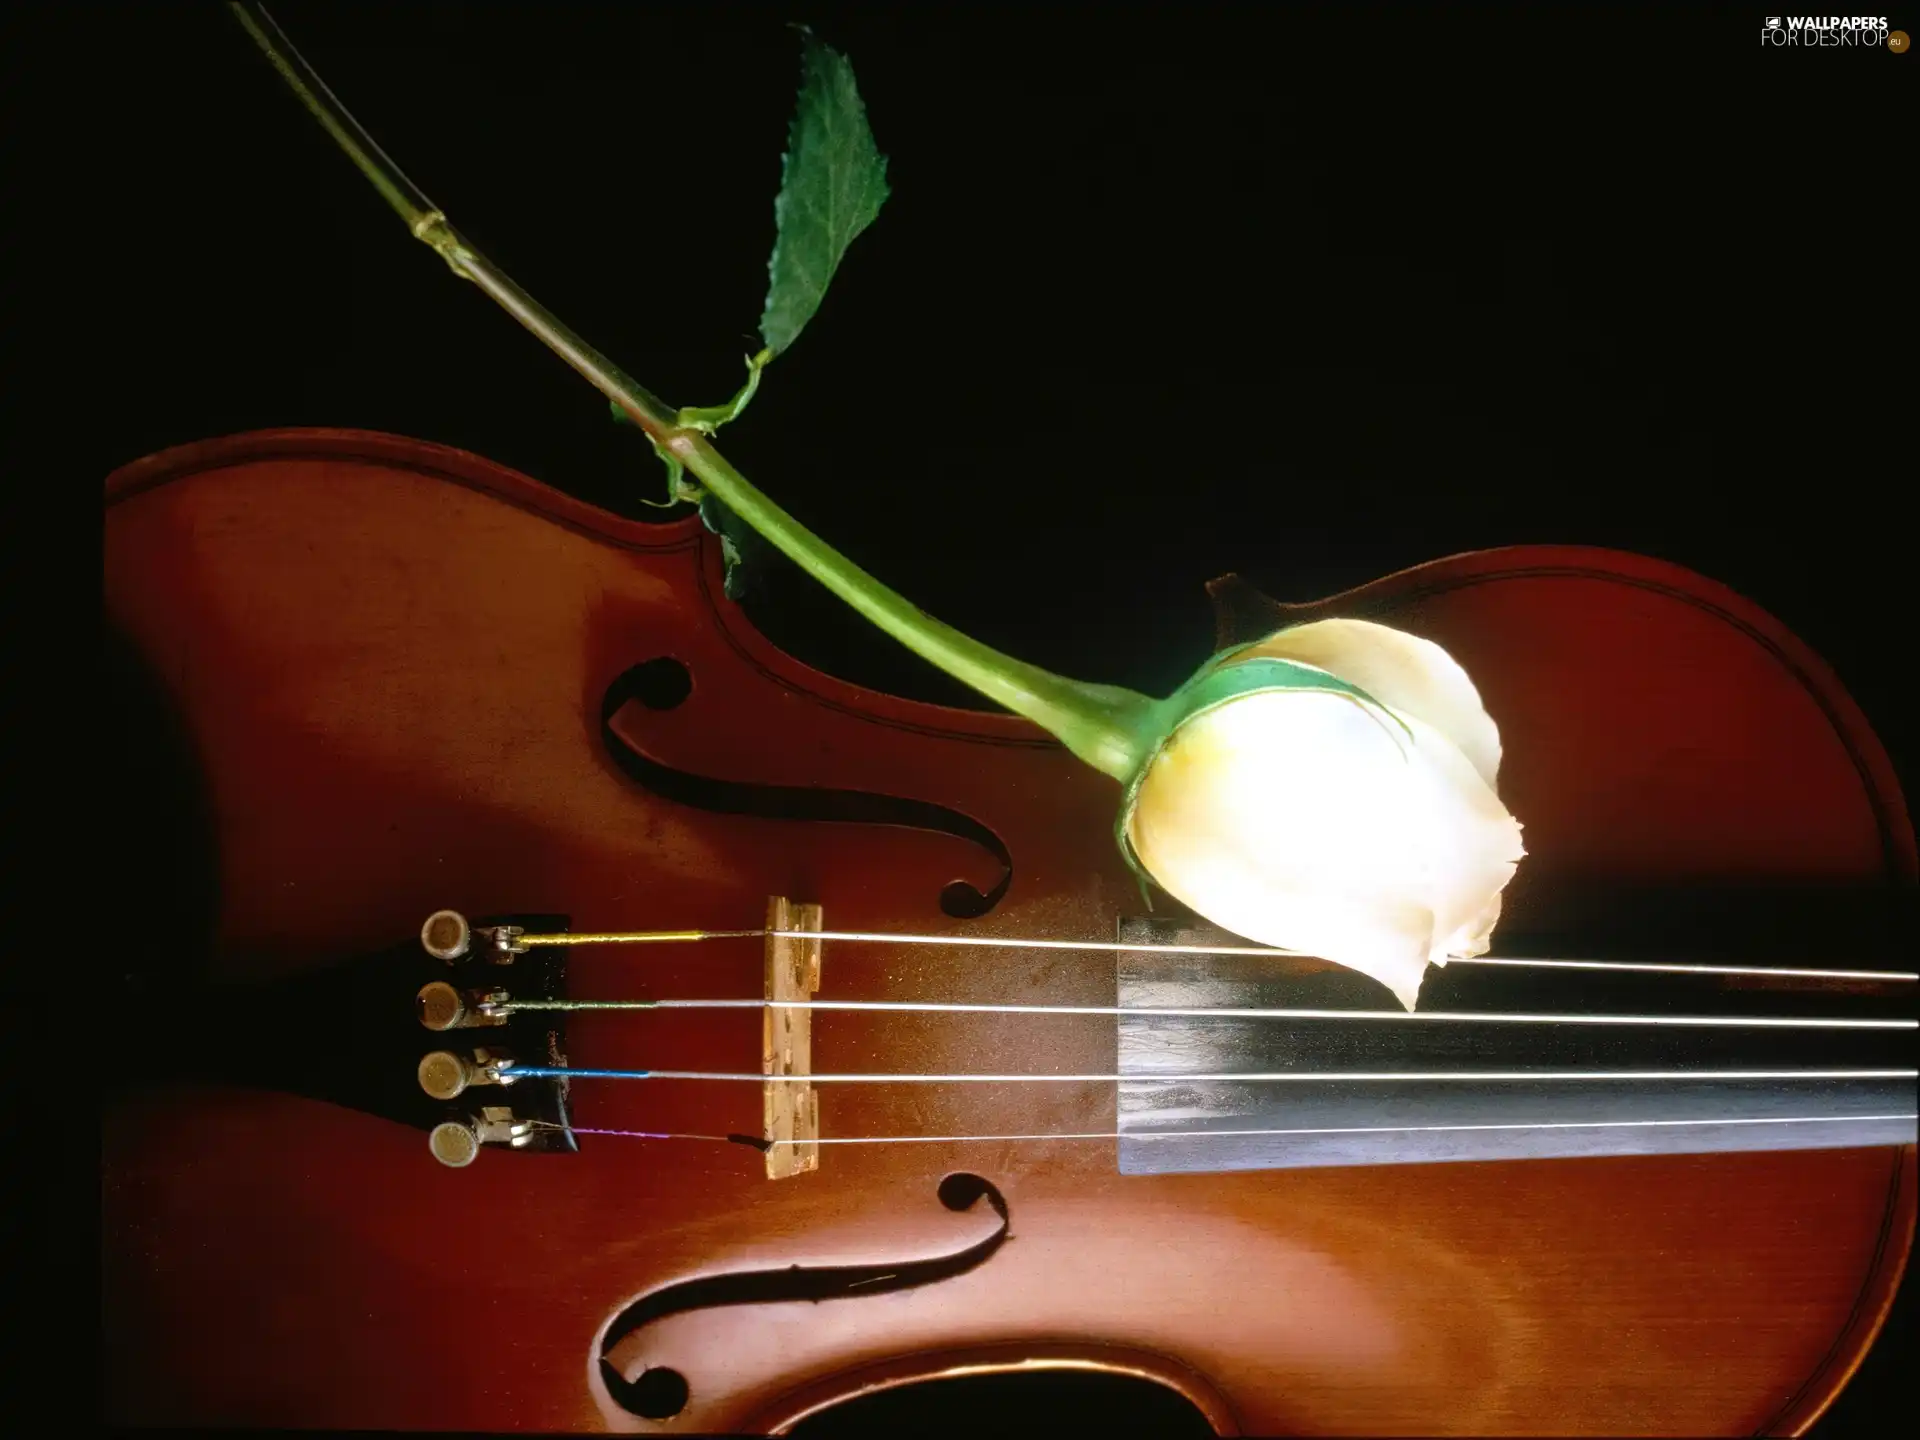 rose, violin, White